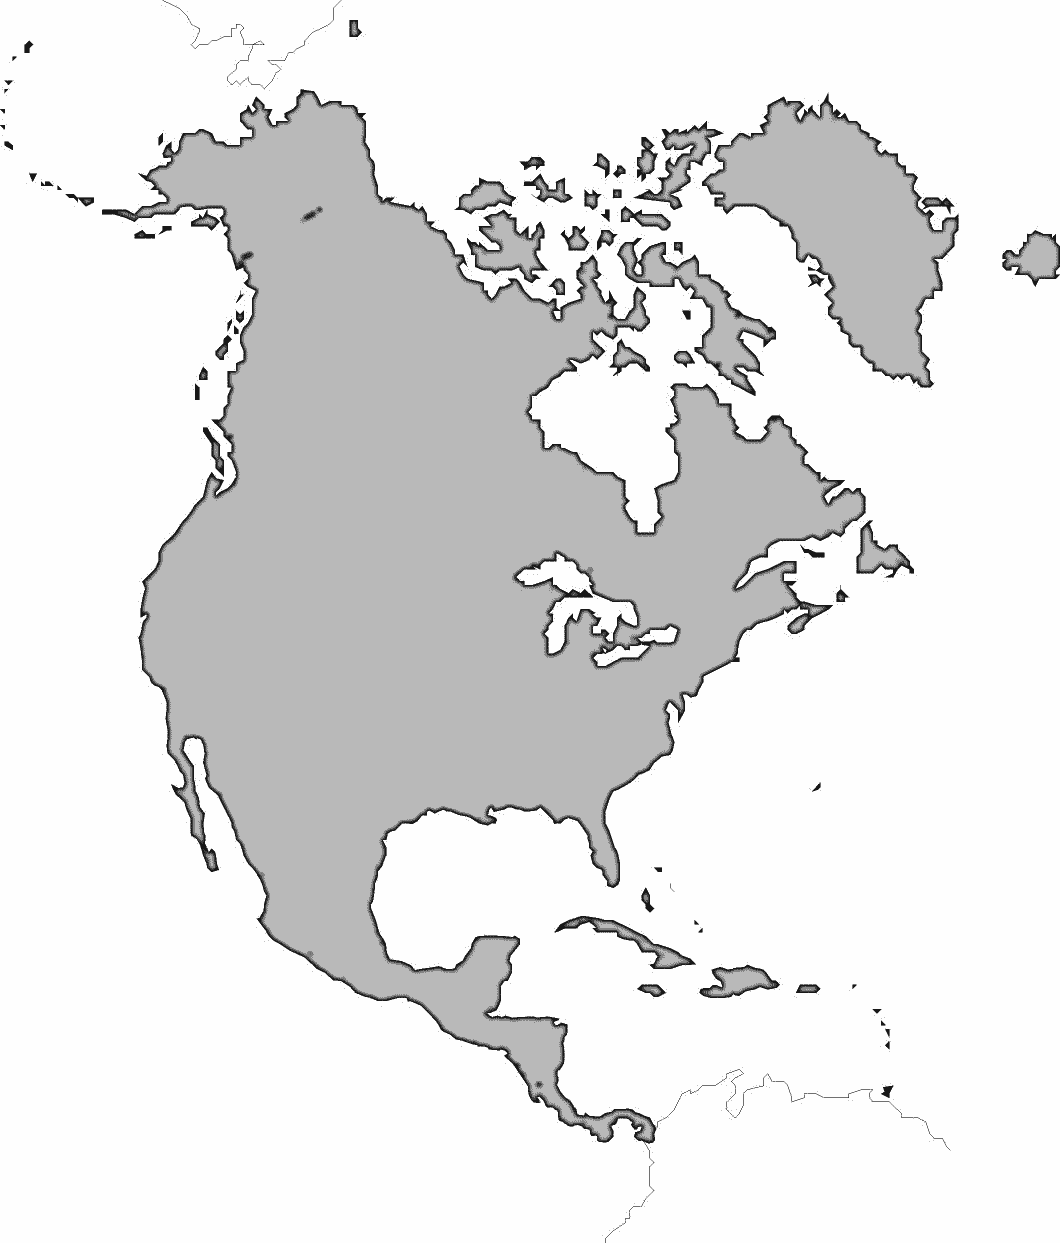 North America Large BW